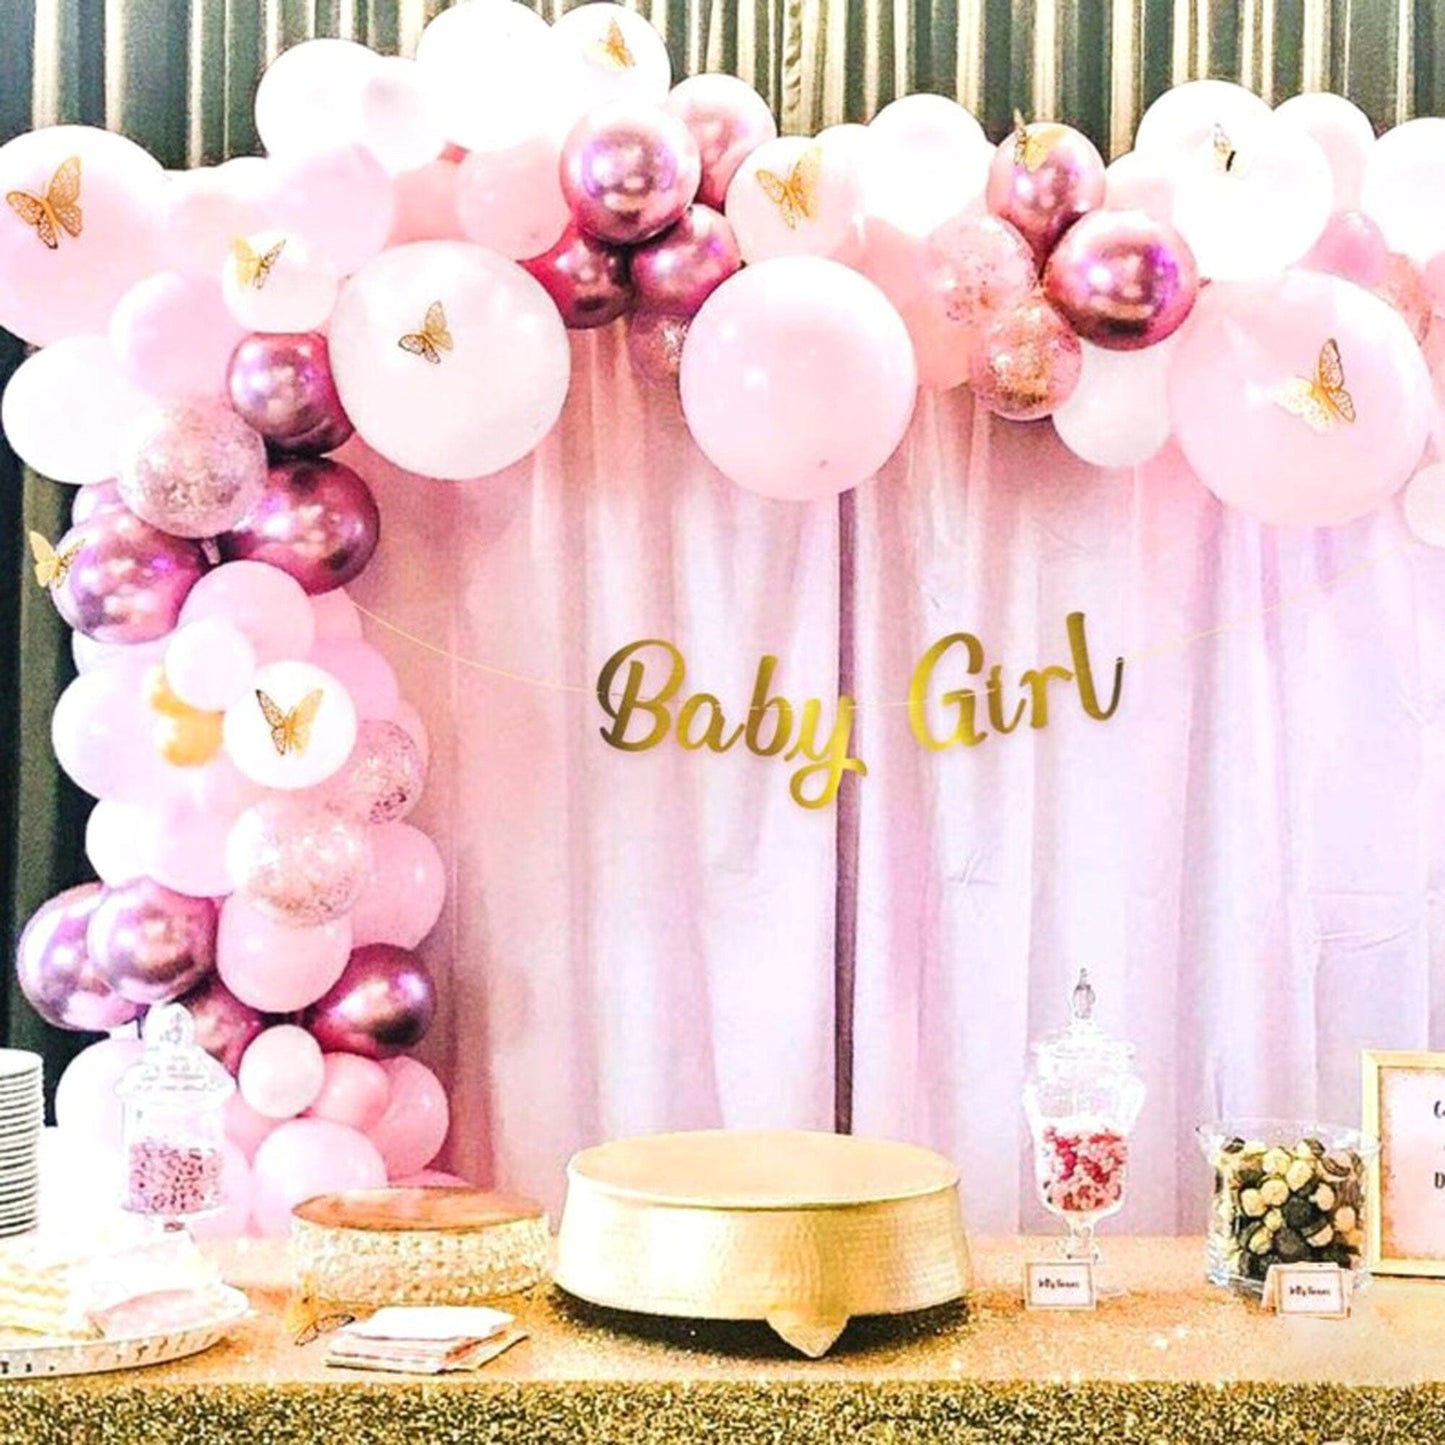 Baby Girl's Celebration Kit: Pink Balloons 🎈, Gold Butterflies 🦋 & 'Baby Girl' Banner 🏷️ Set